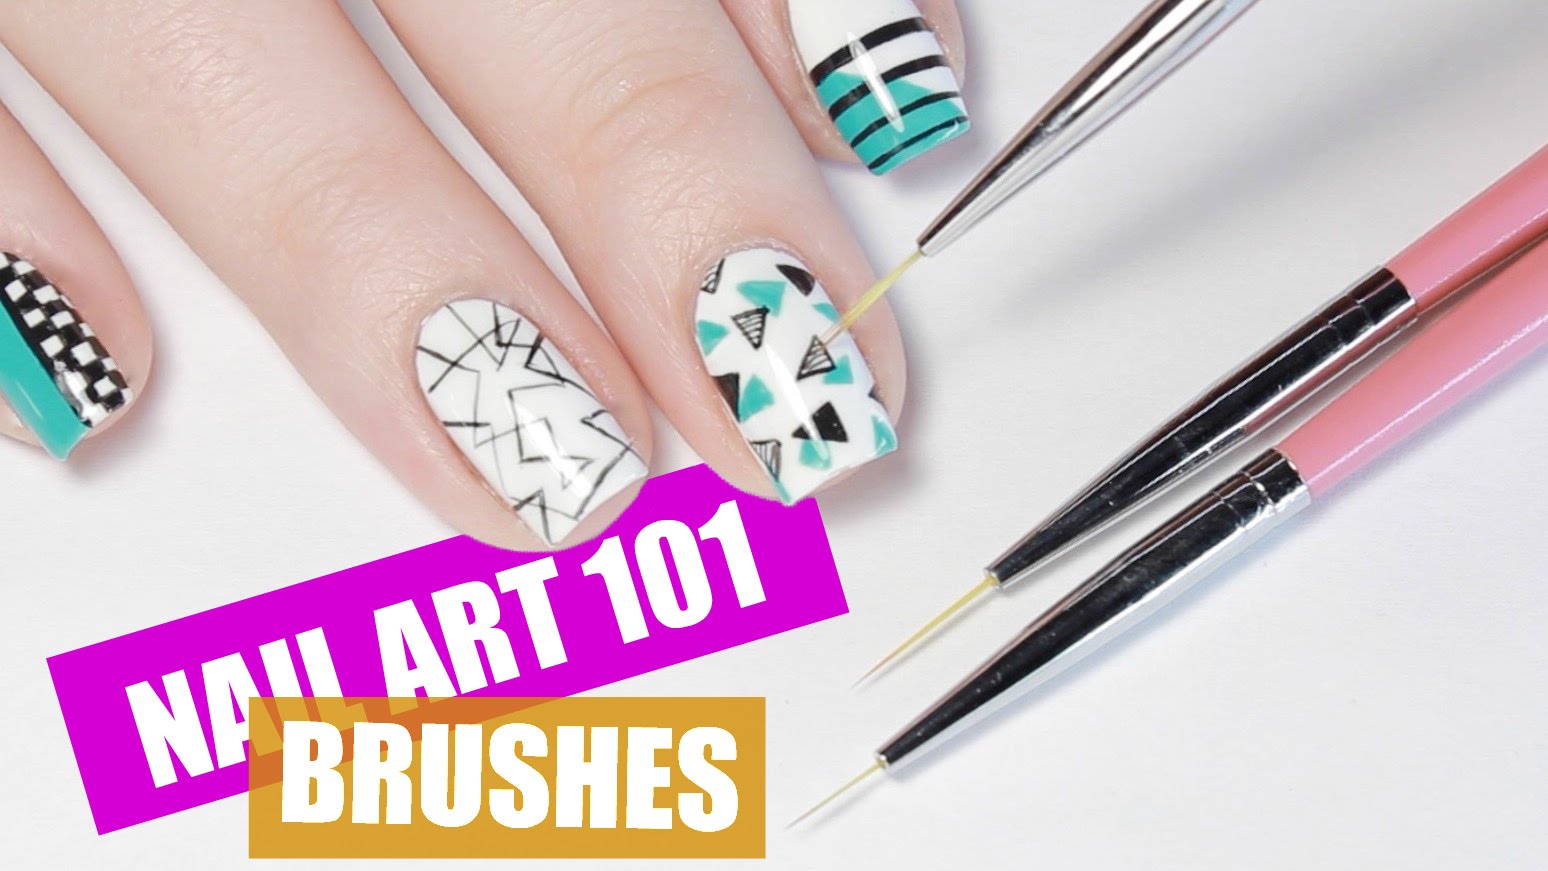 2. Nail Art Brushes - Target - wide 7